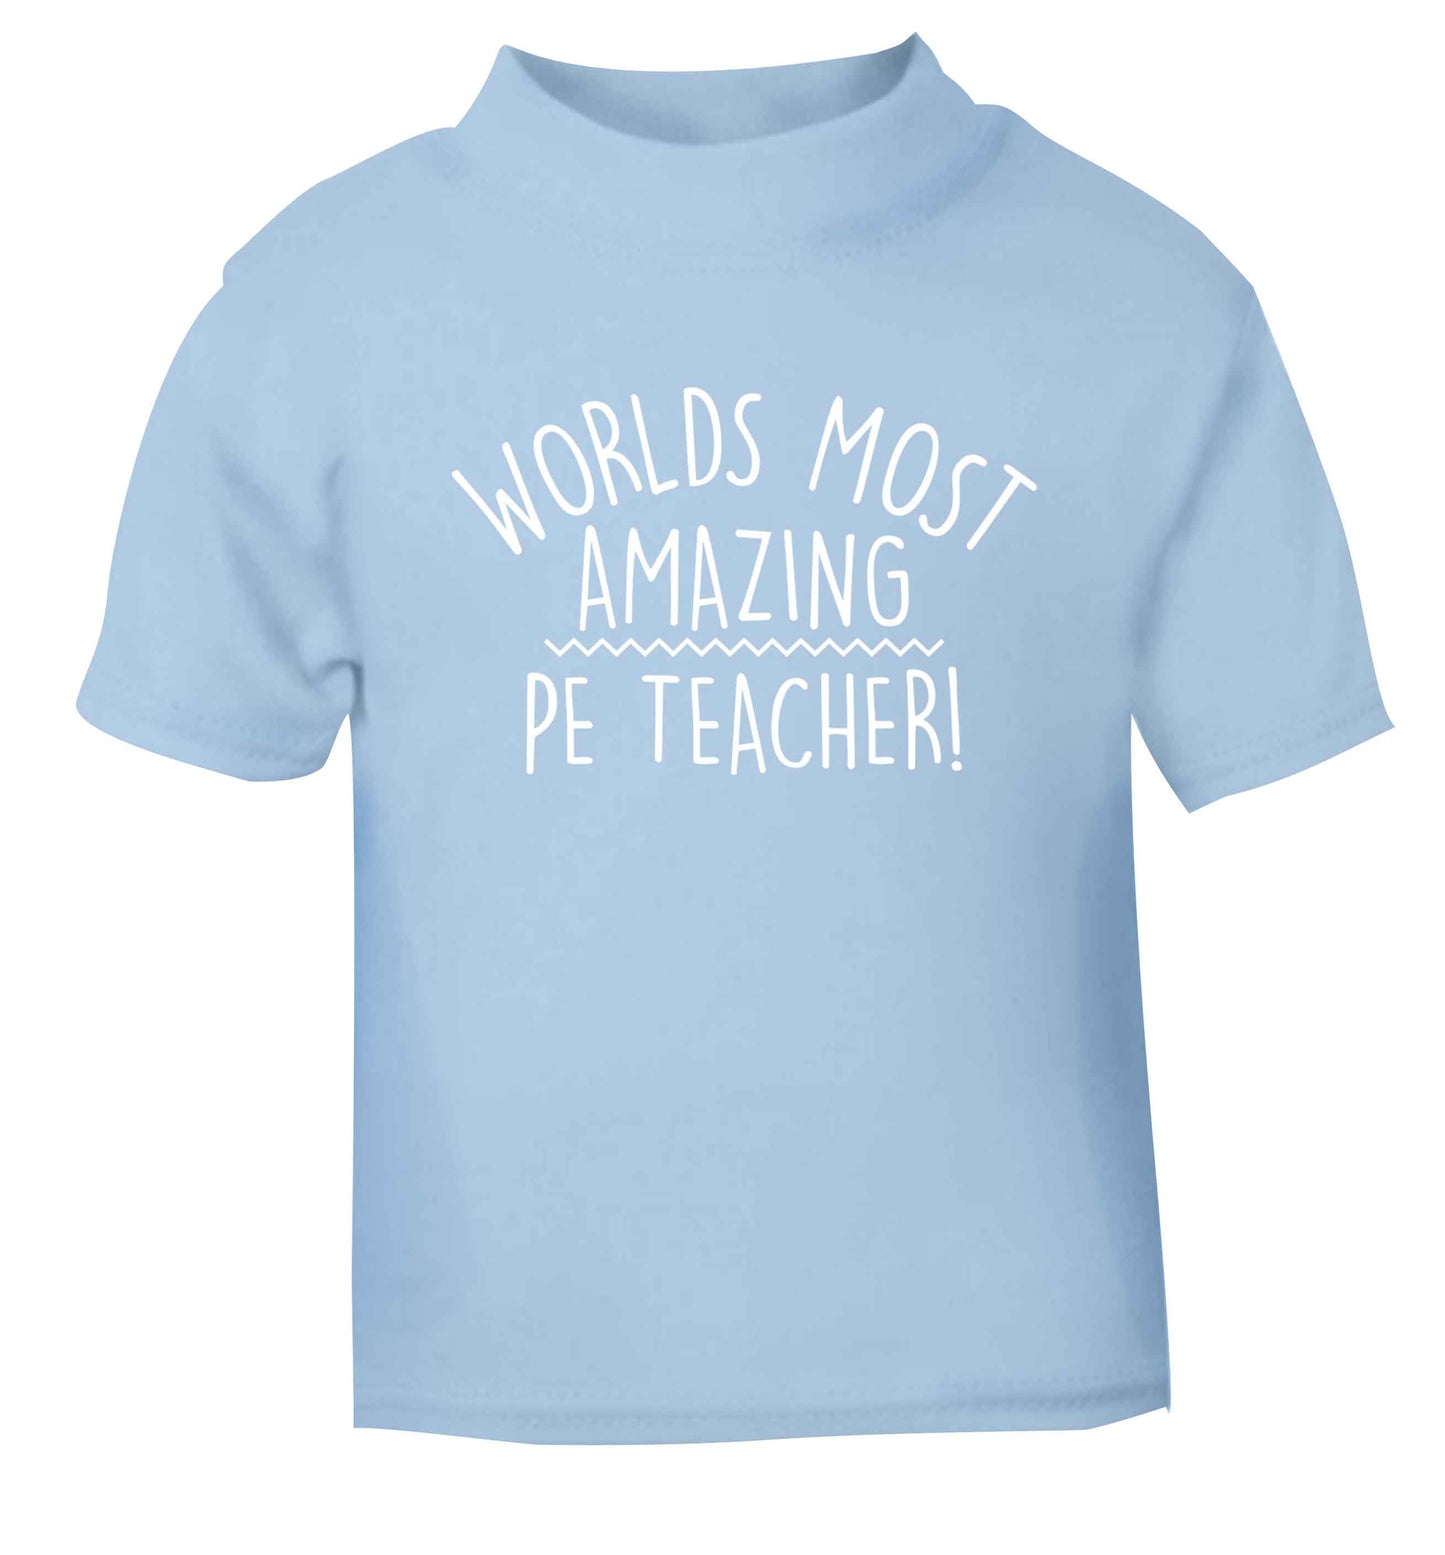 Worlds most amazing PE teacher light blue baby toddler Tshirt 2 Years